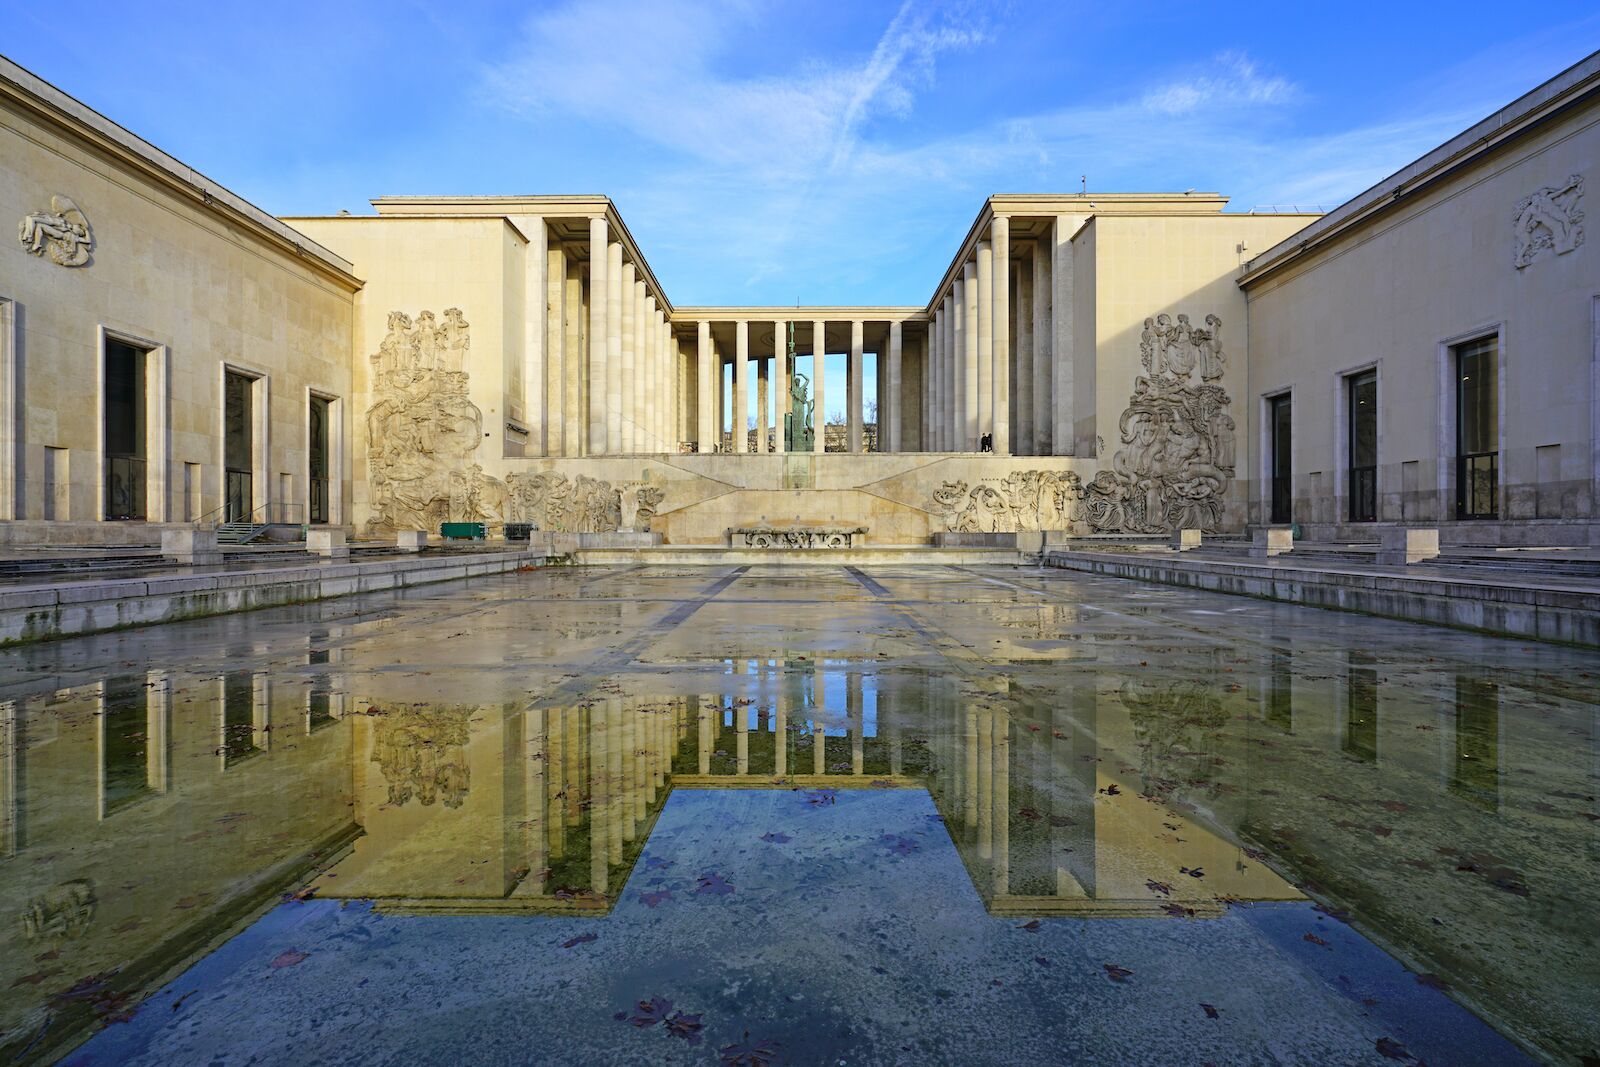 Paris museums: Exterior of the Musée d'Art Modern de Paris, located in the Palais de Tokyo